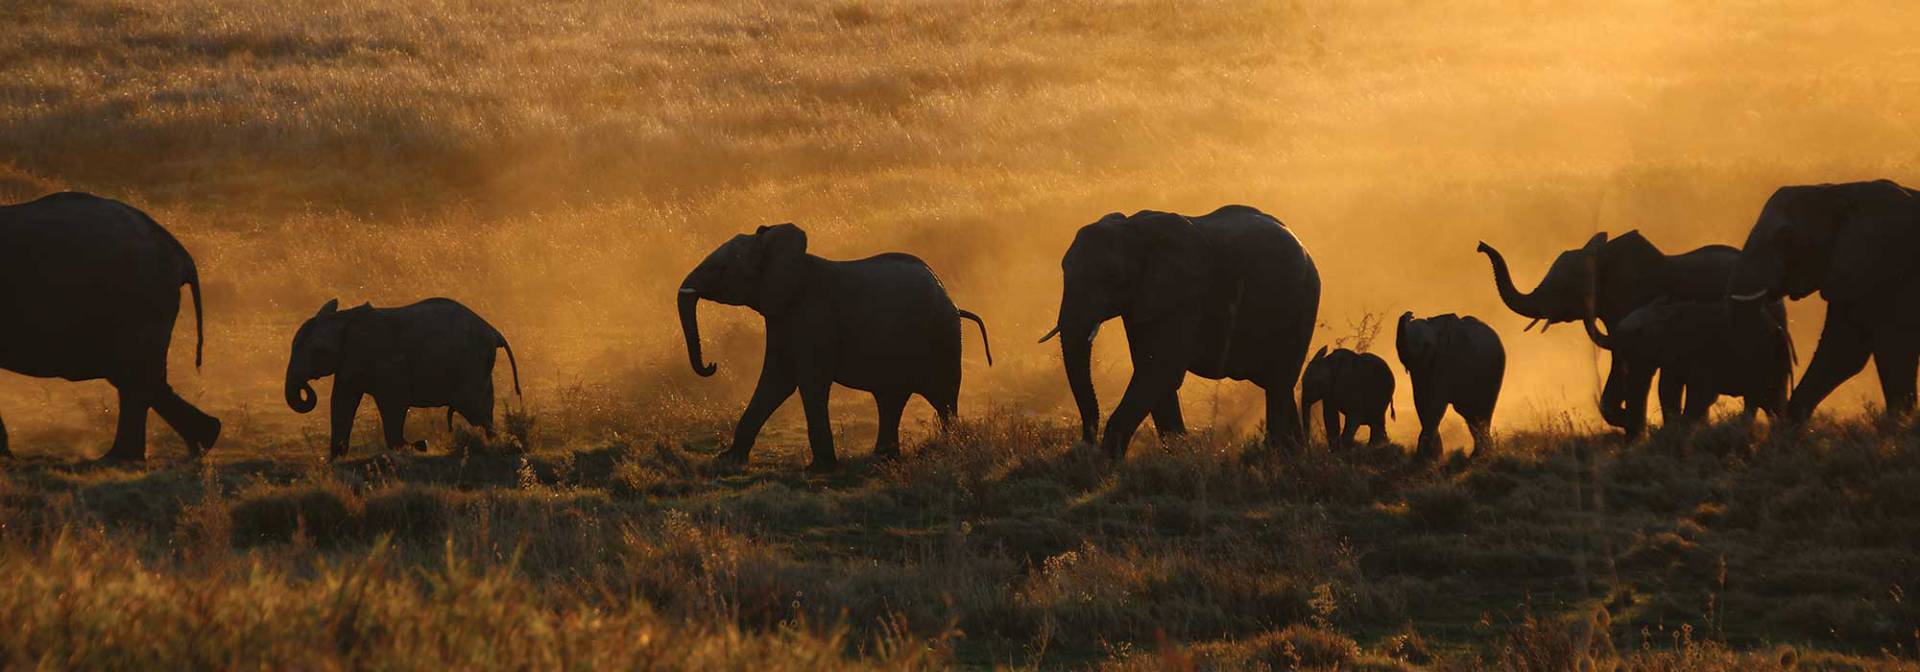 Elephants in the Kaudom